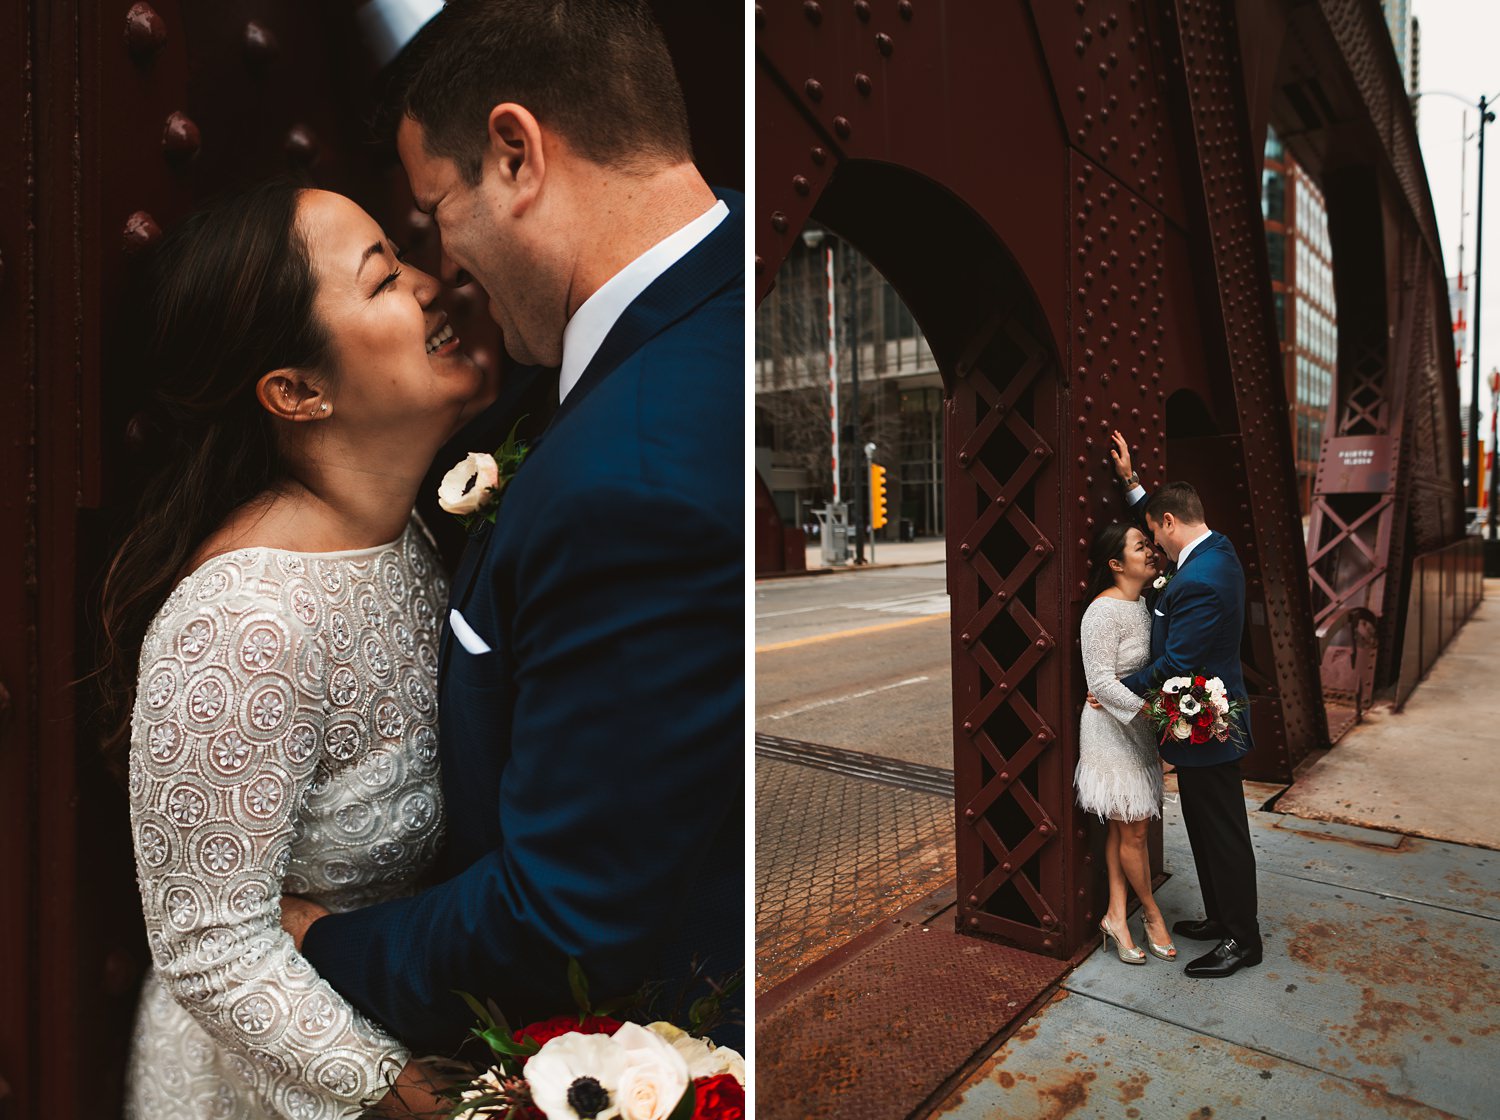 LaSalle Street Bridge wedding photos - The Adamkovi